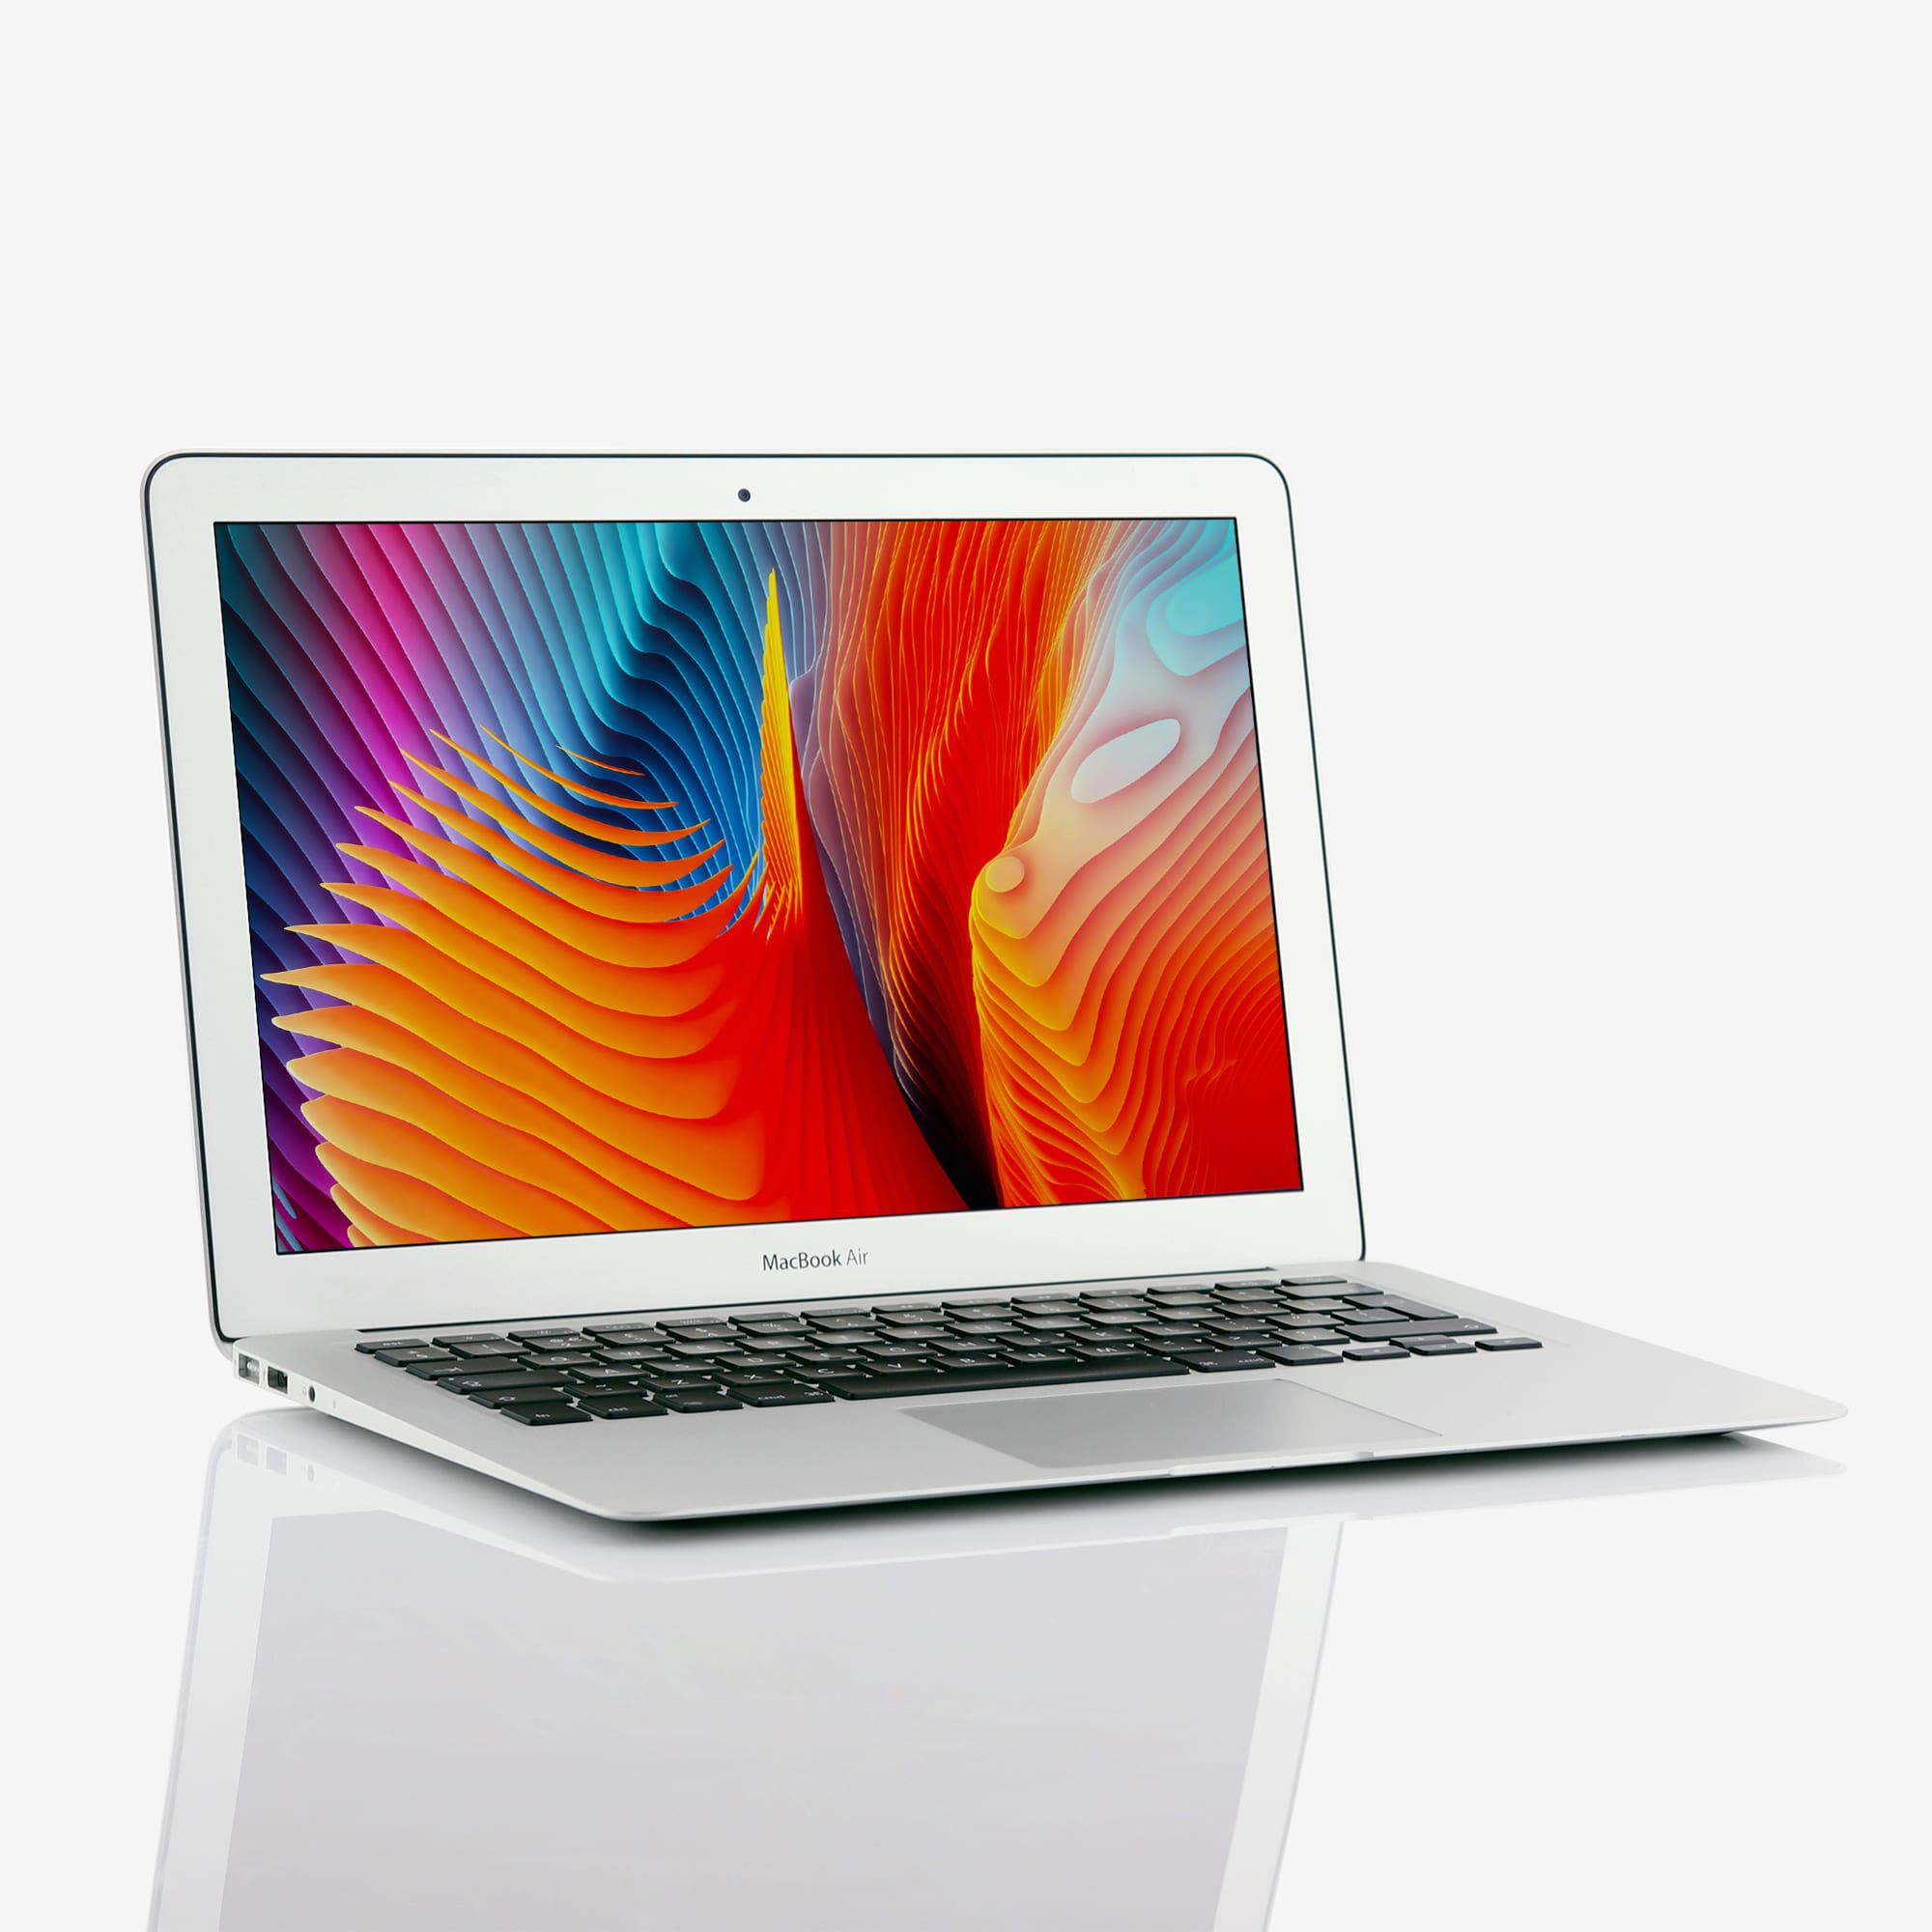 1 x Apple MacBook Air 13 Inch Intel Core i7 1.70 GHz (2013)